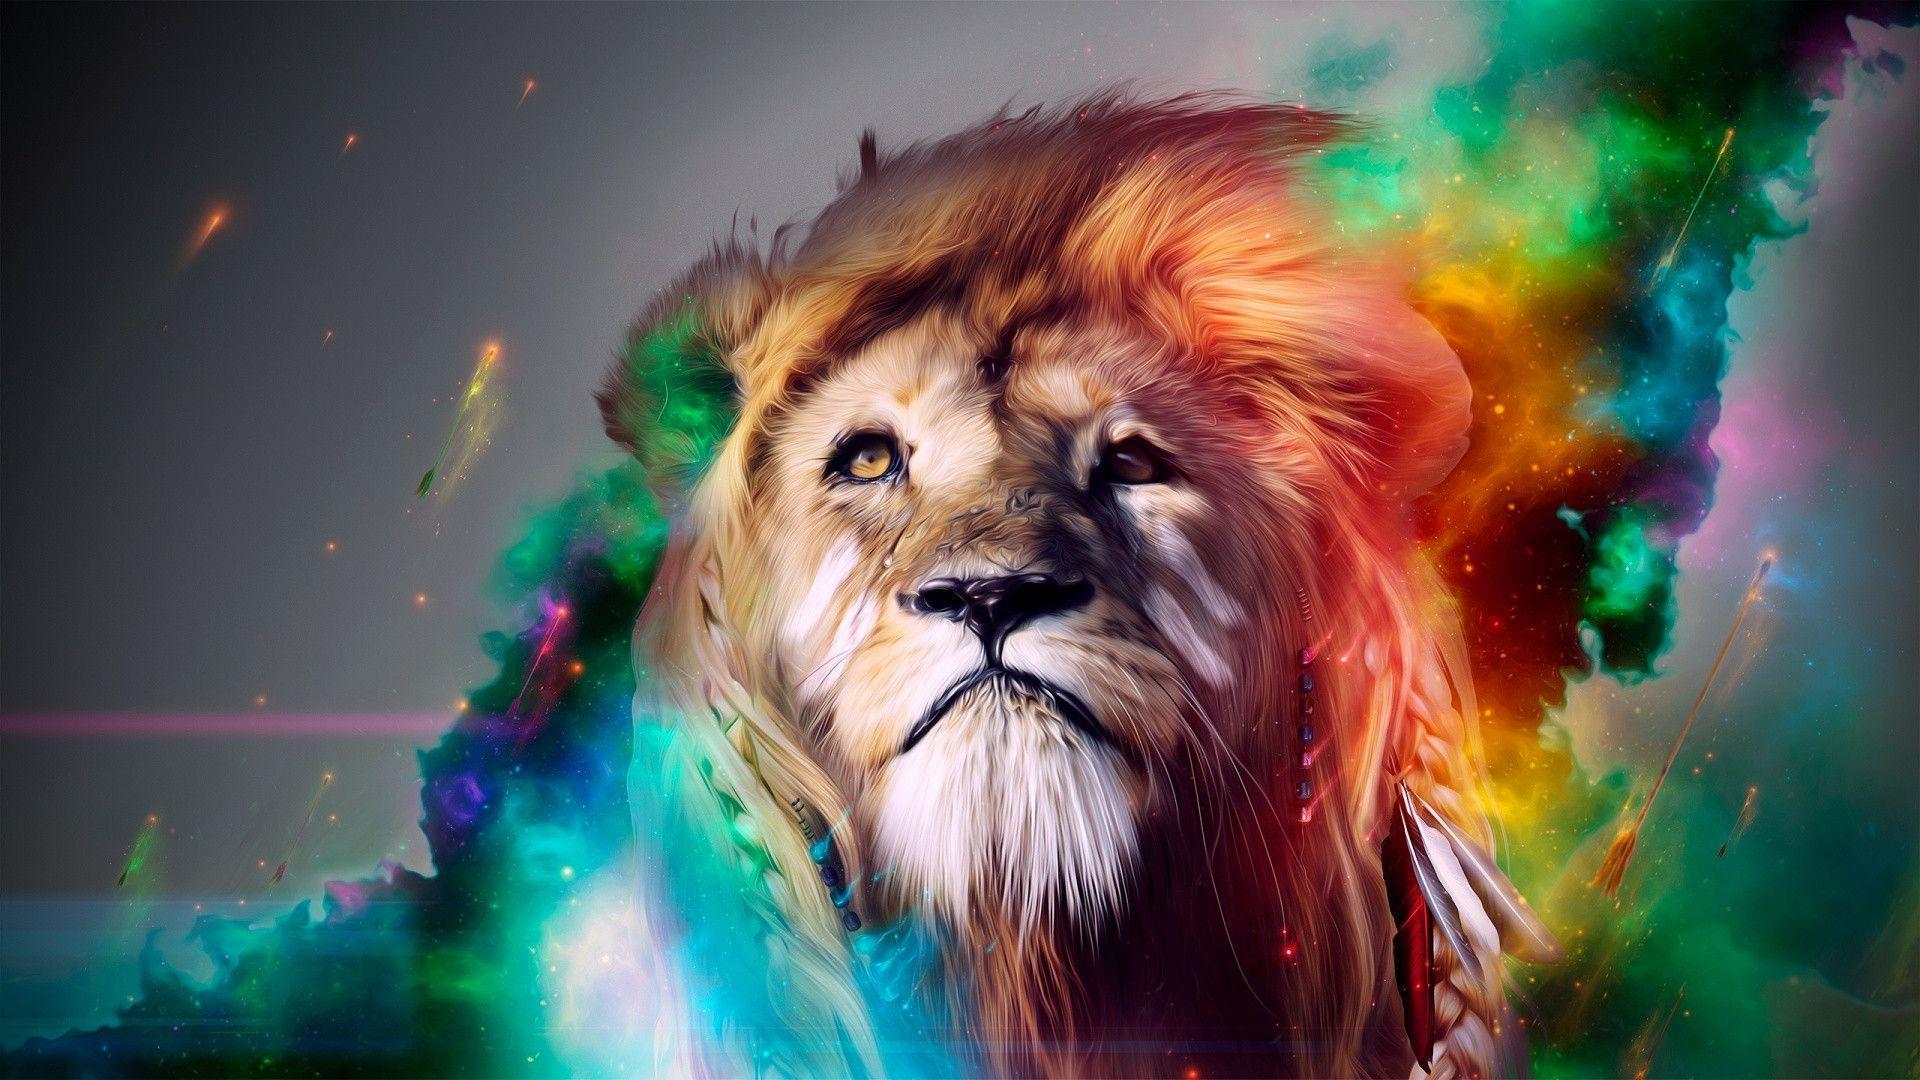 Animal: Cool Lion Wallpaper HD 1080P, lion vs tiger, suny lion HD